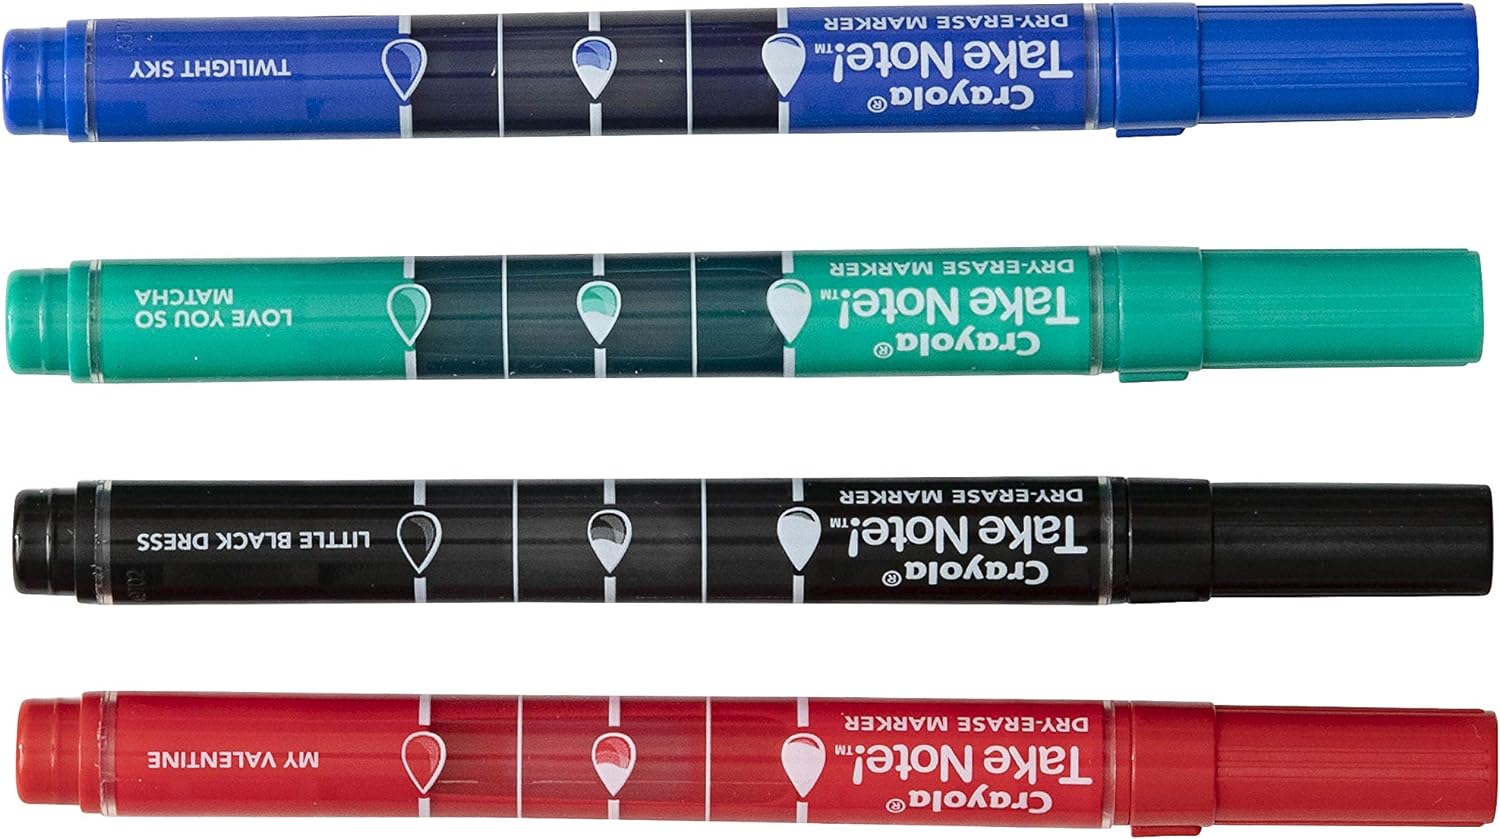 Crayola Dry Erase Markers Set Of 4 586541